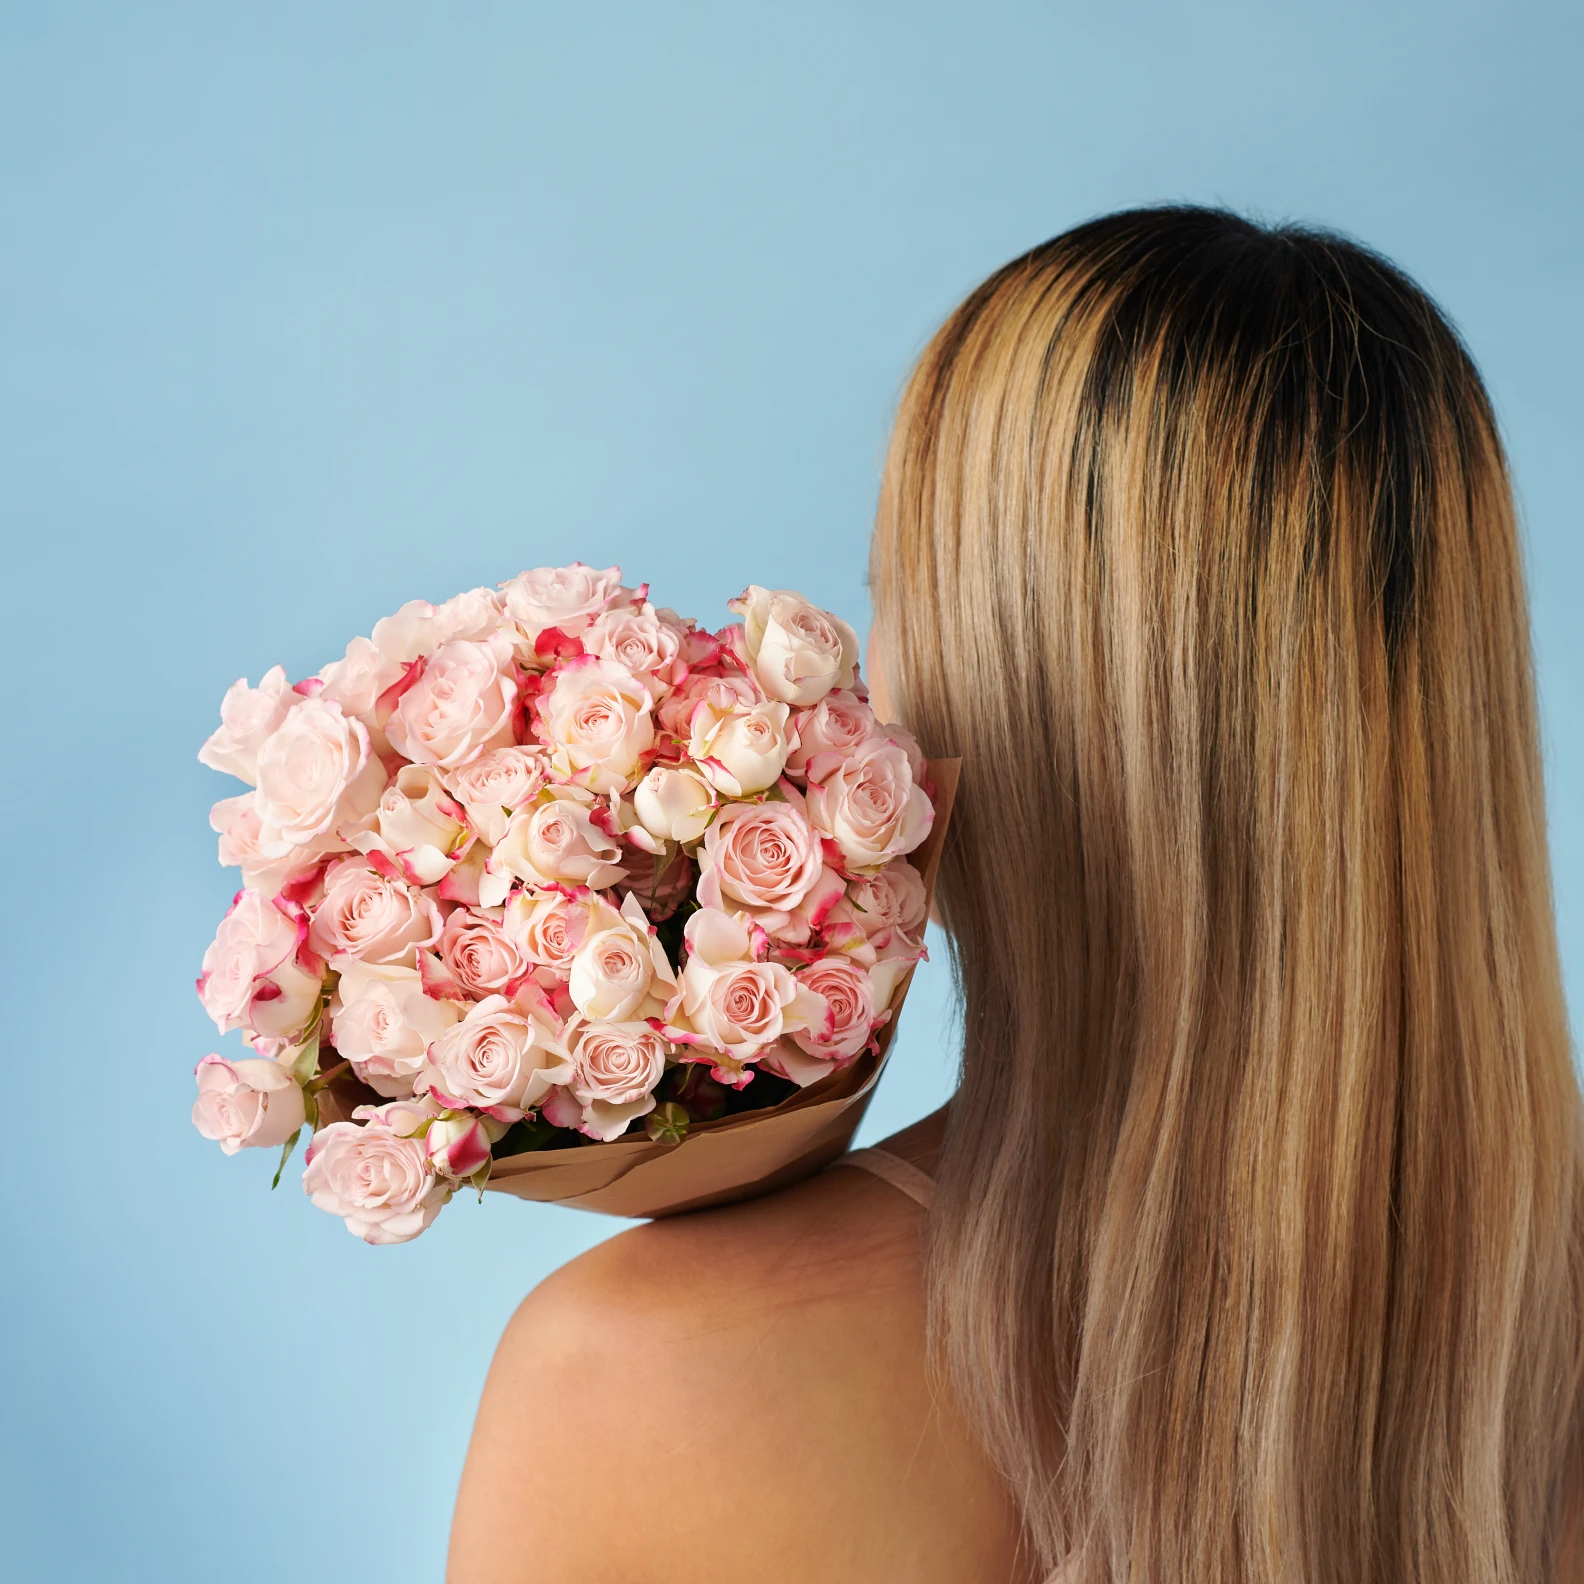 10 Spray Pink Roses - image №4